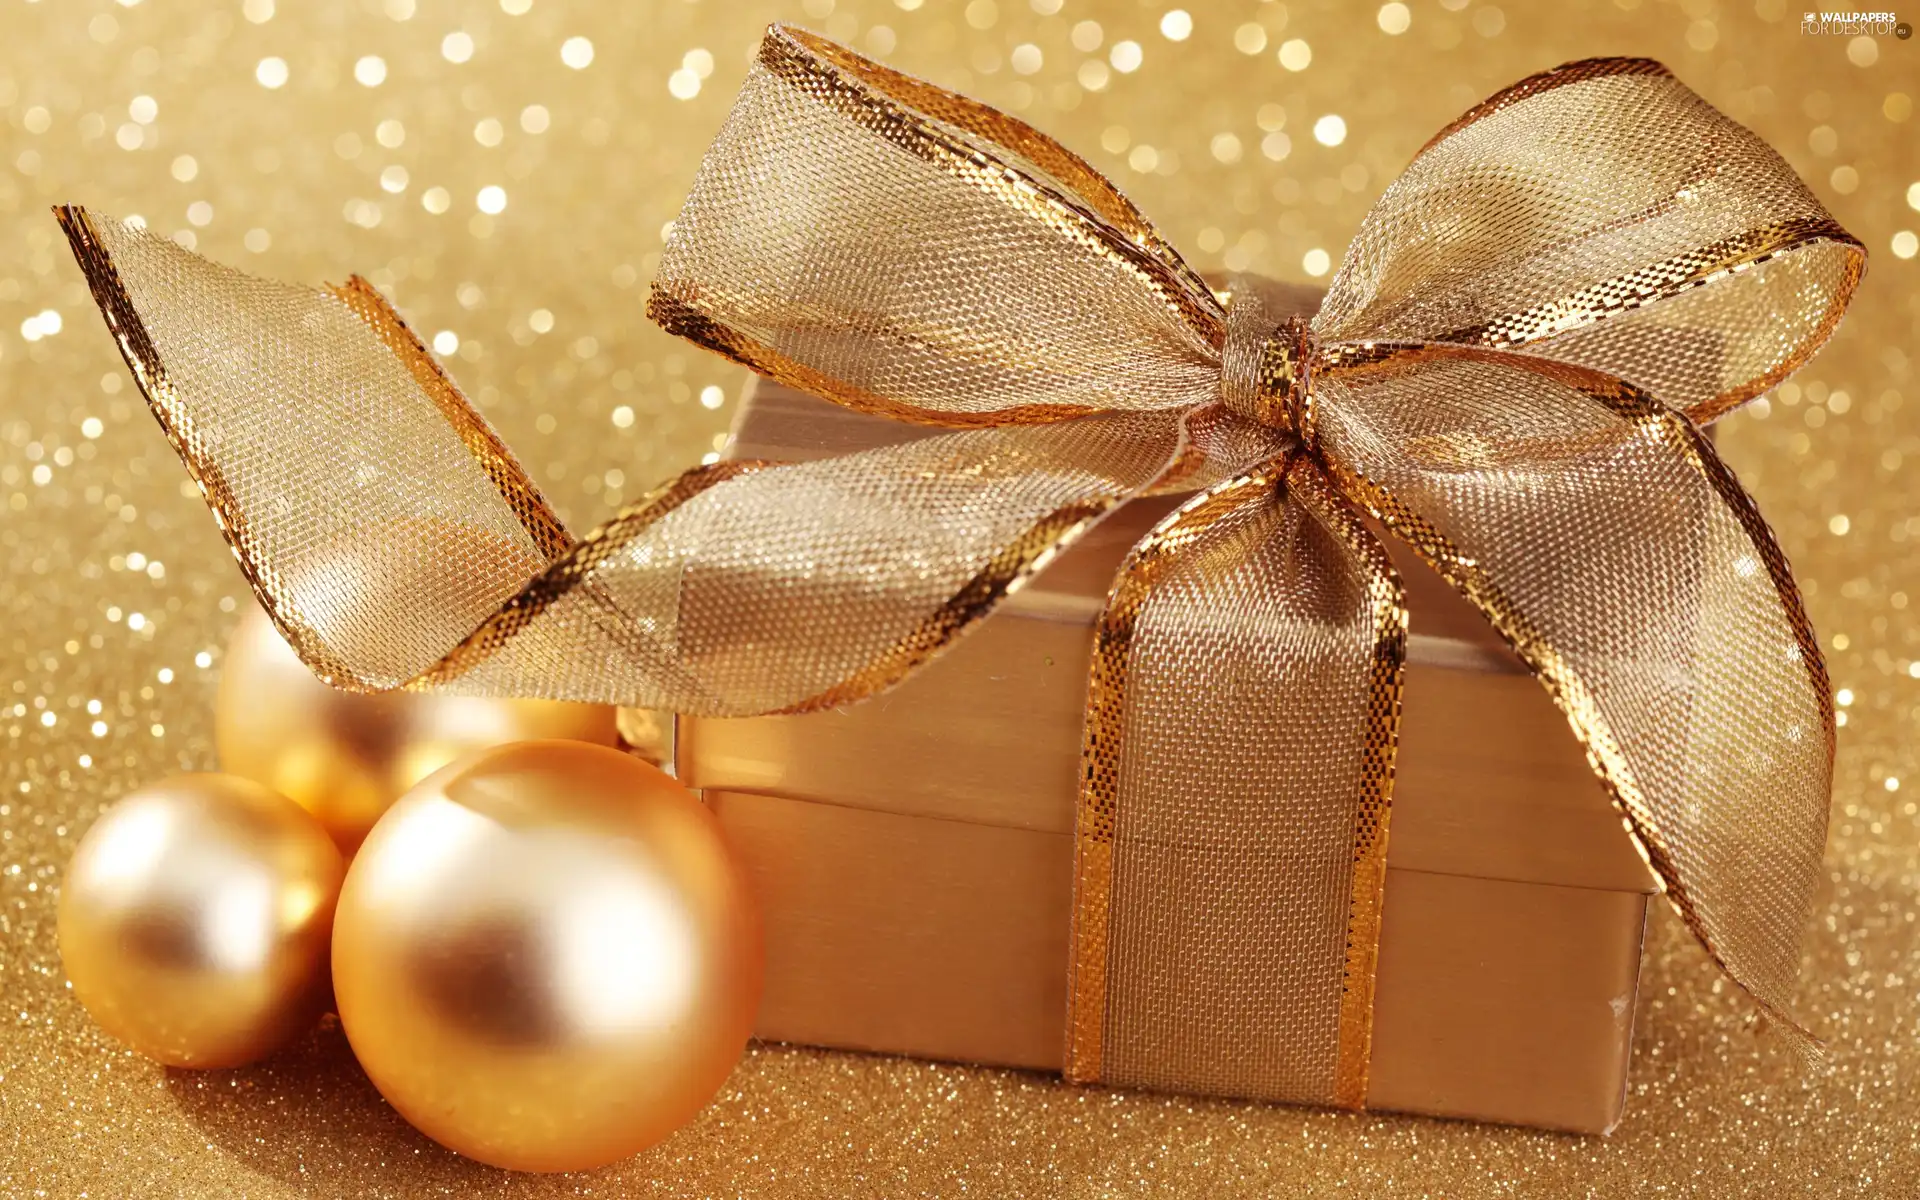 Present, Christmas, ornamentation